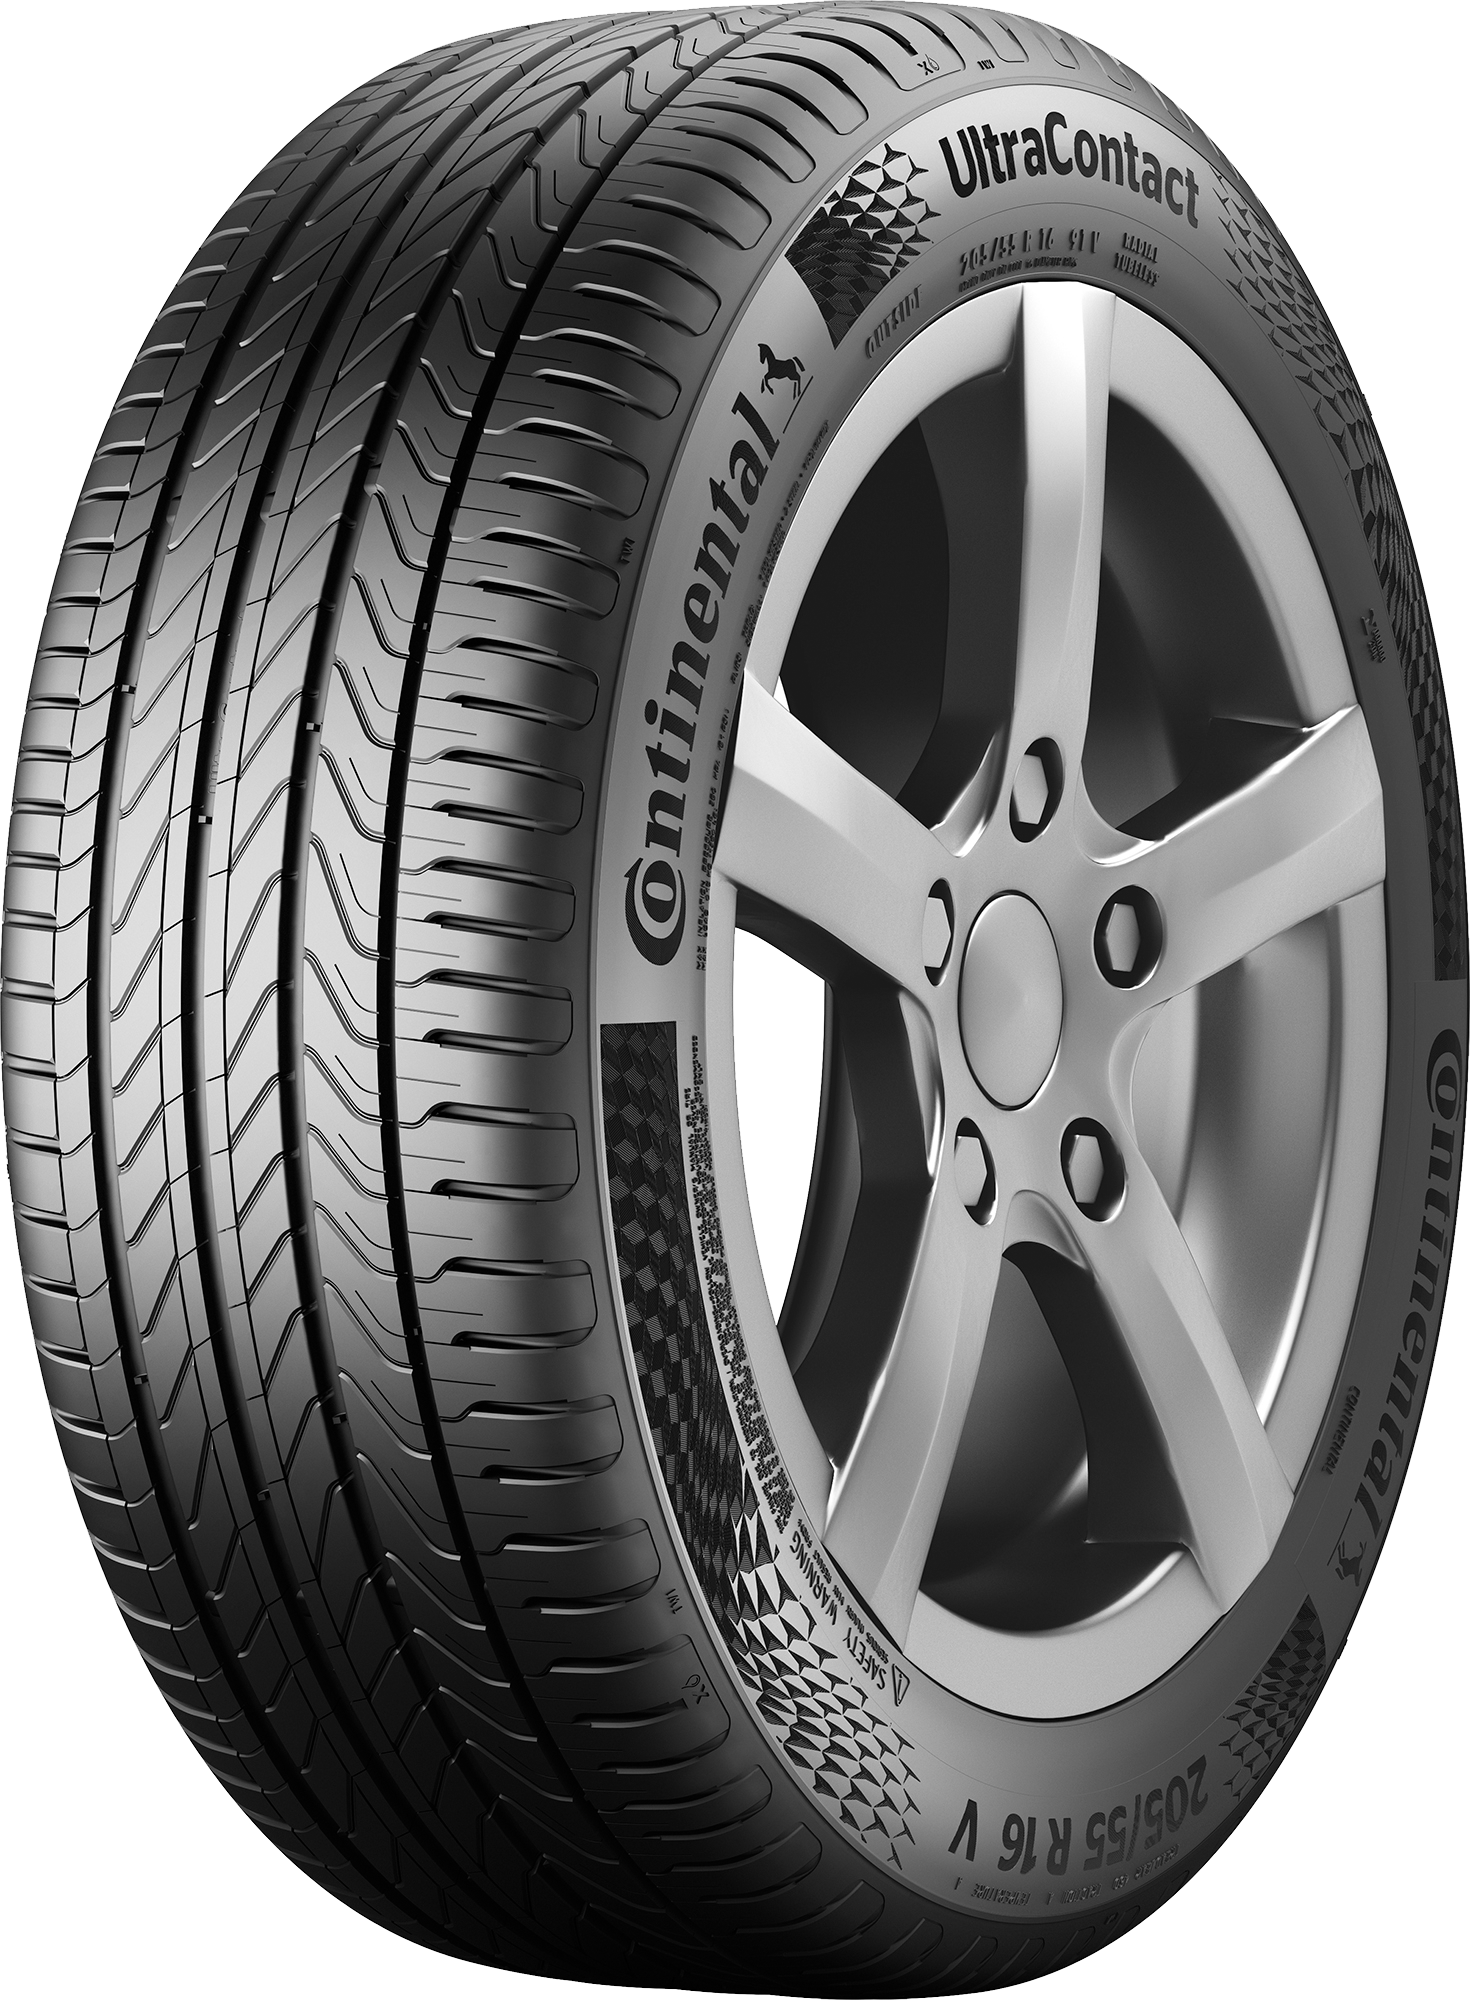 ADAC, ÖAMTC and TCS: Continental summer tires \